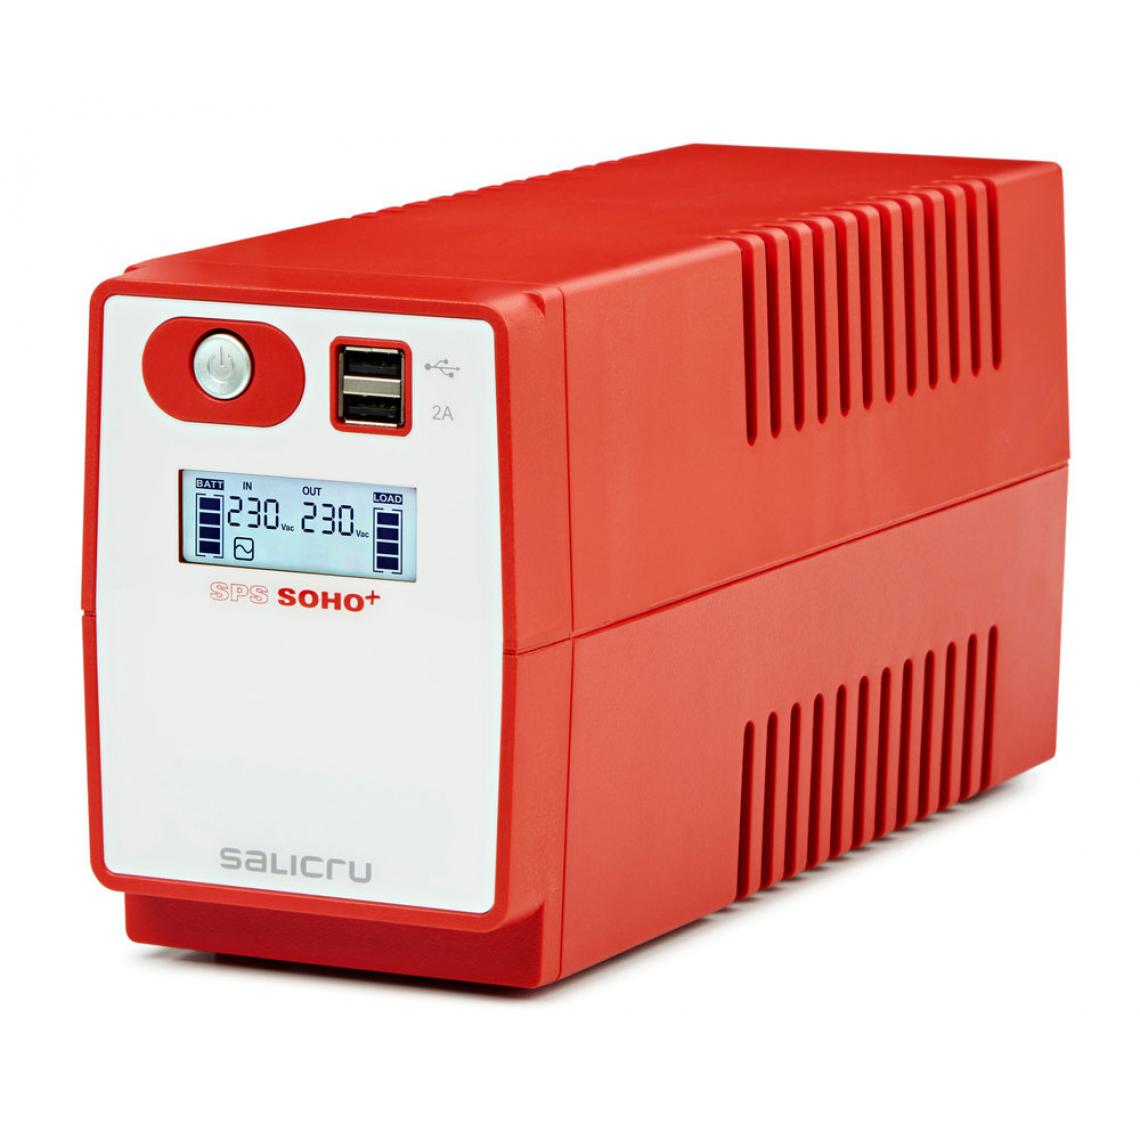 Salicru - Onduleur Salicru SPS 500 SOHO+ IEC (500VA/300Watts) - Line-Interactive 4 prises IEC(C13) USB Protection surcharge - Onduleur